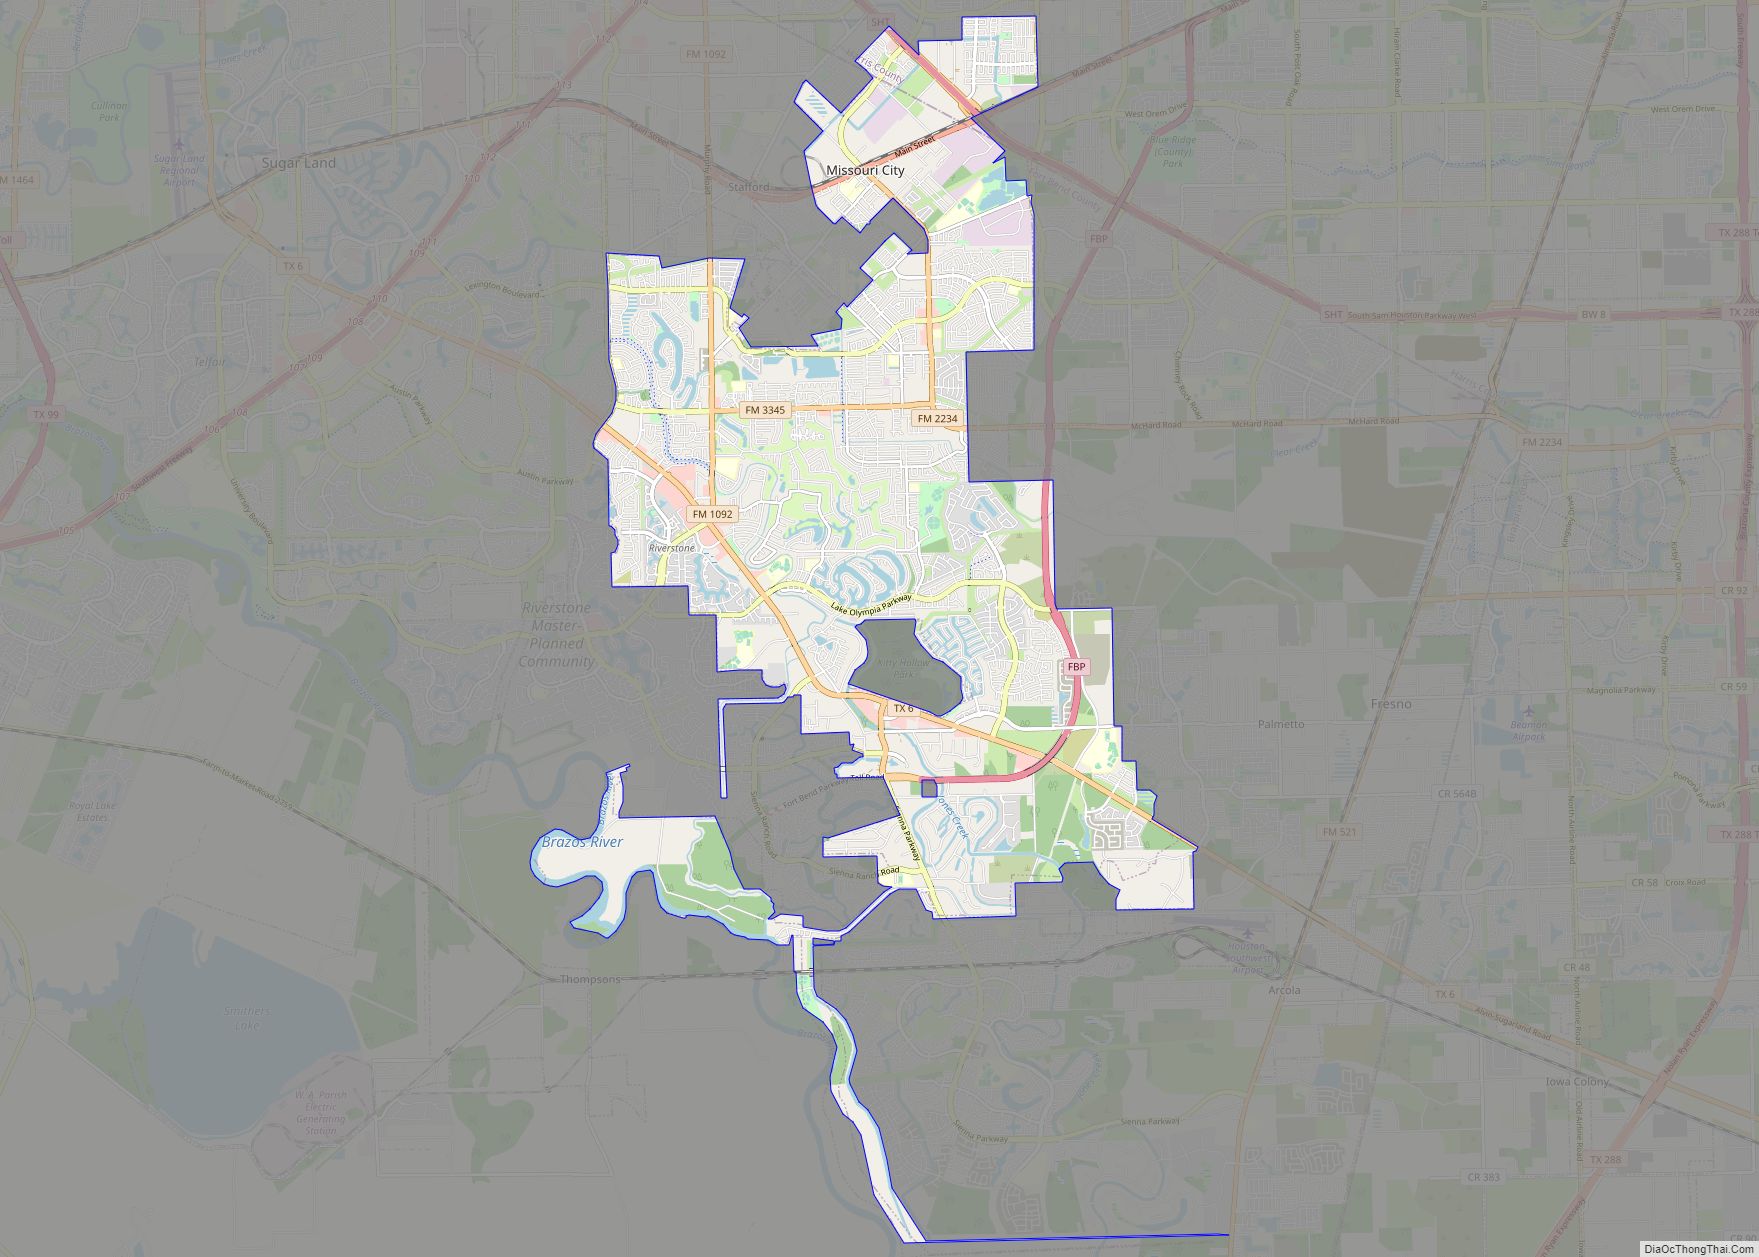 Map of Missouri City, Texas